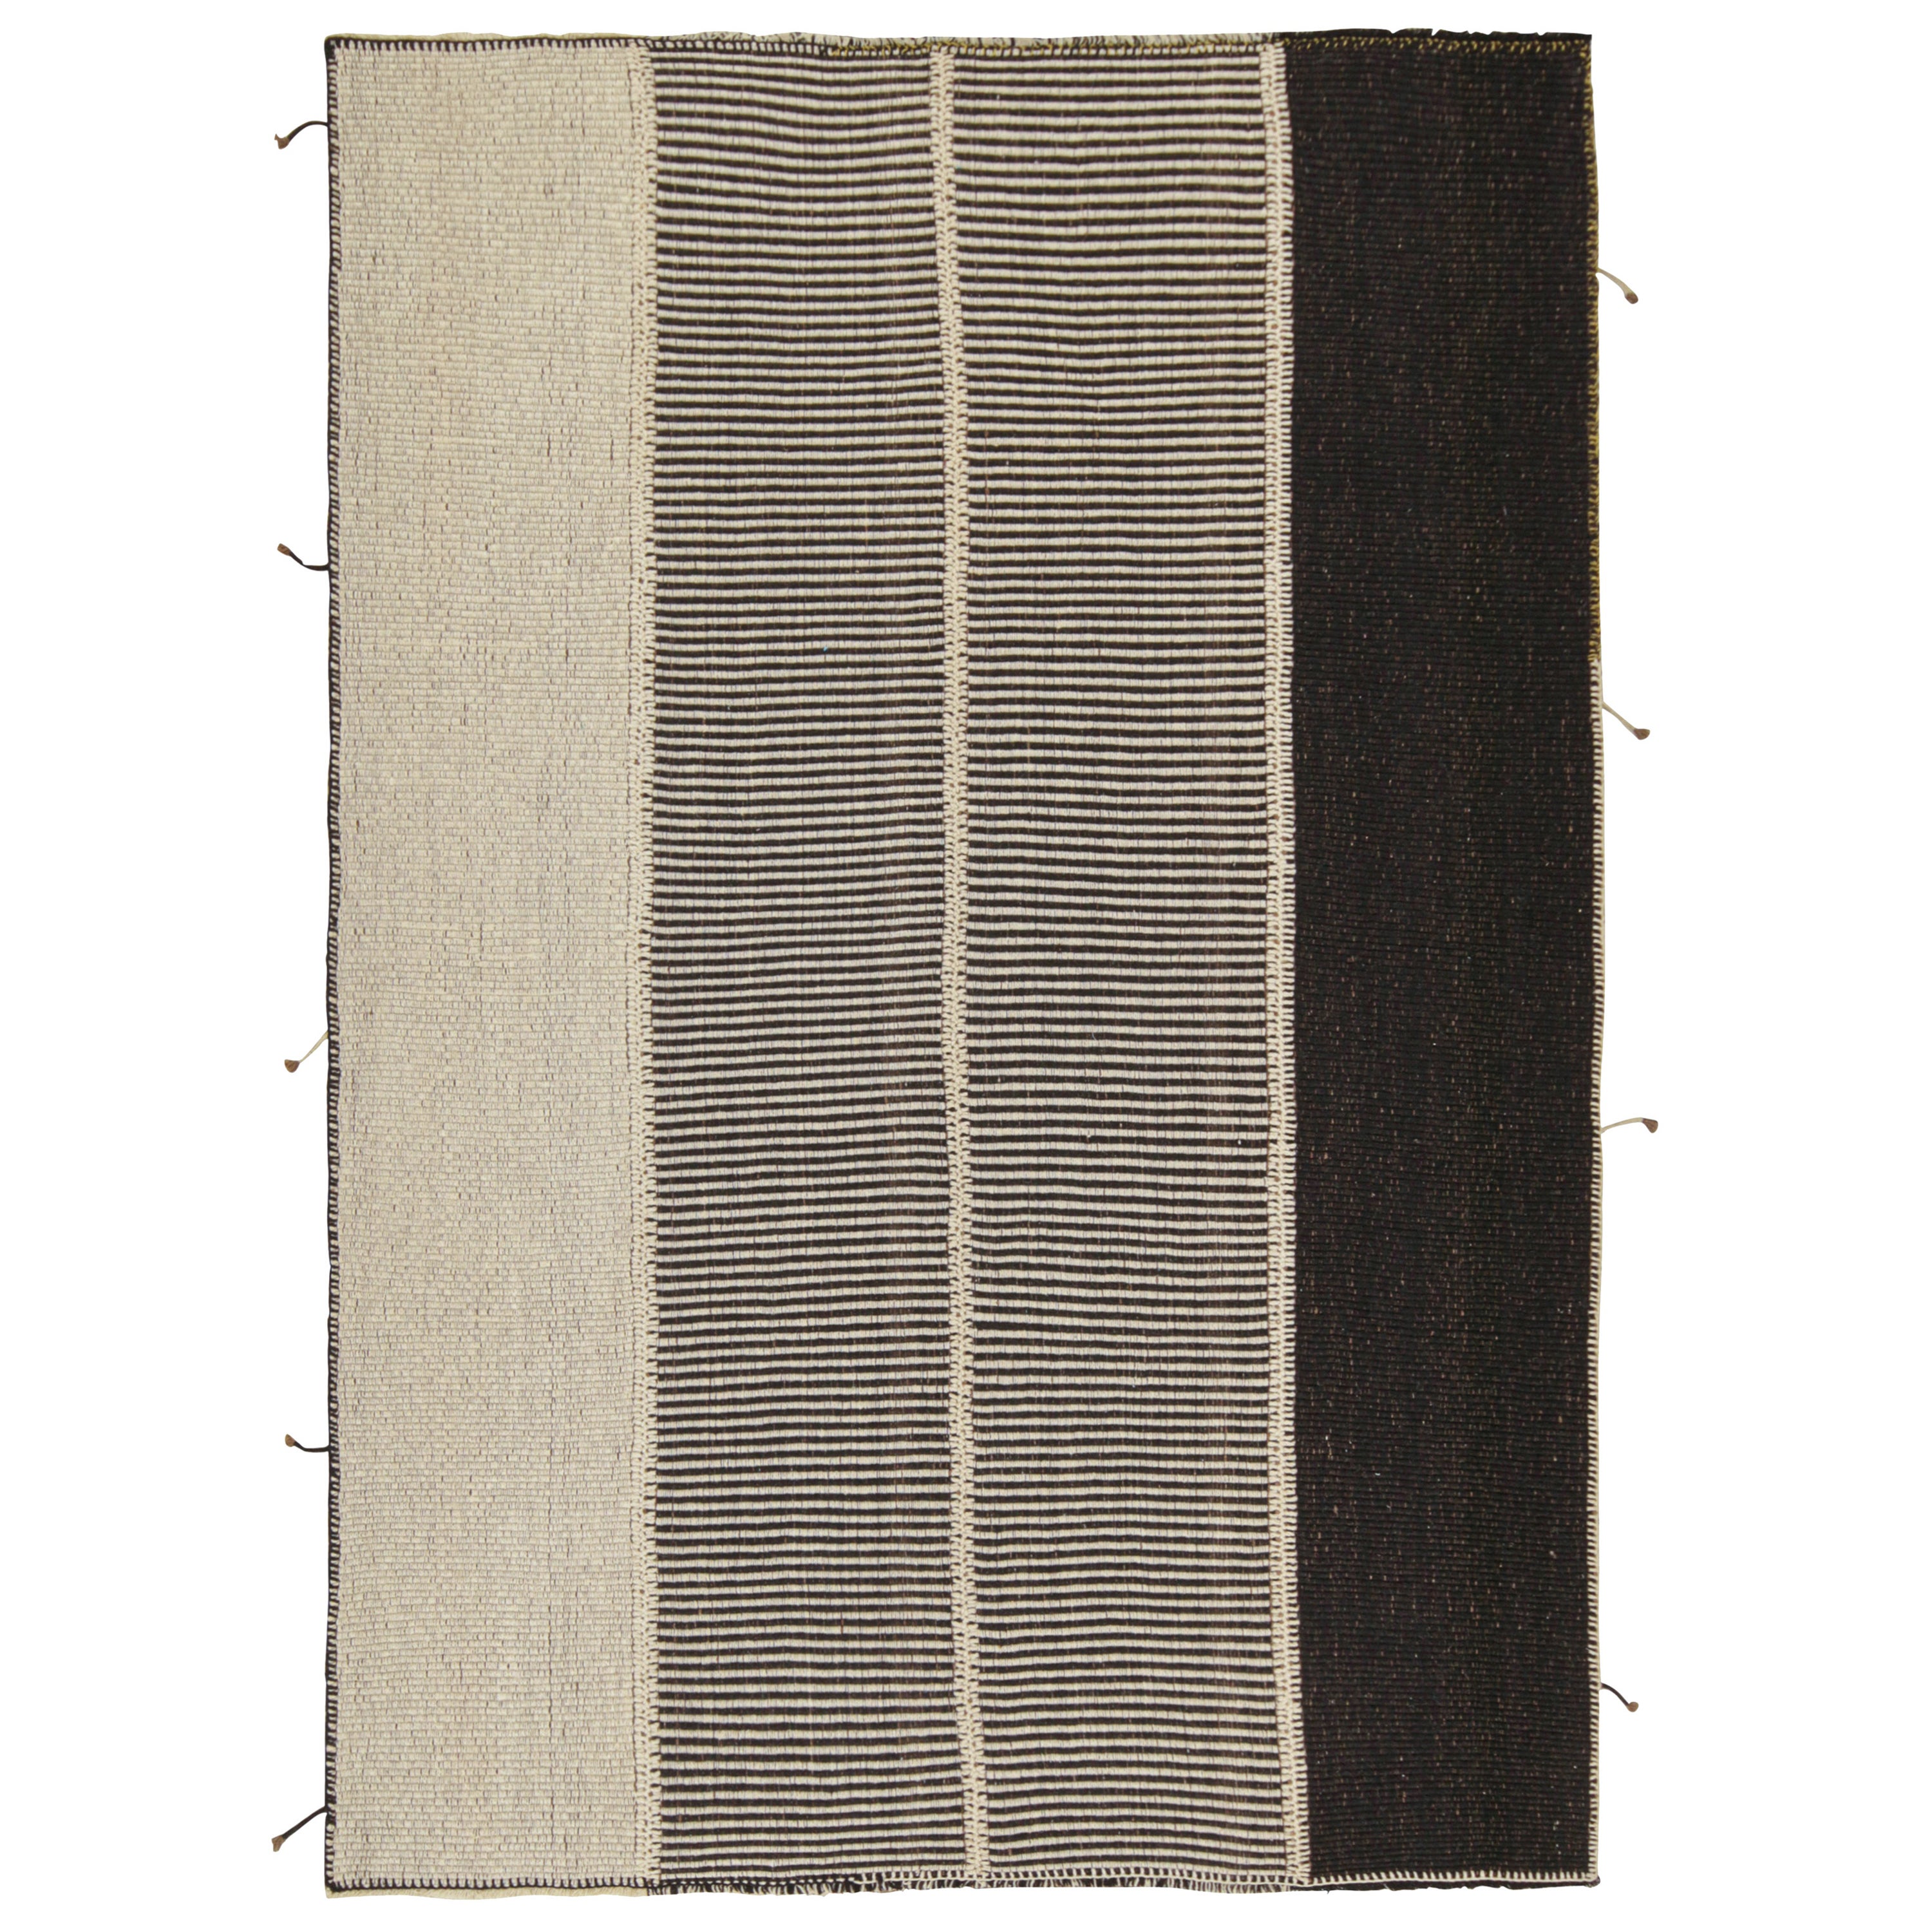 Rug & Kilim’s Custom Kilim Design with Beige-Brown, Black and Off-White Stripes